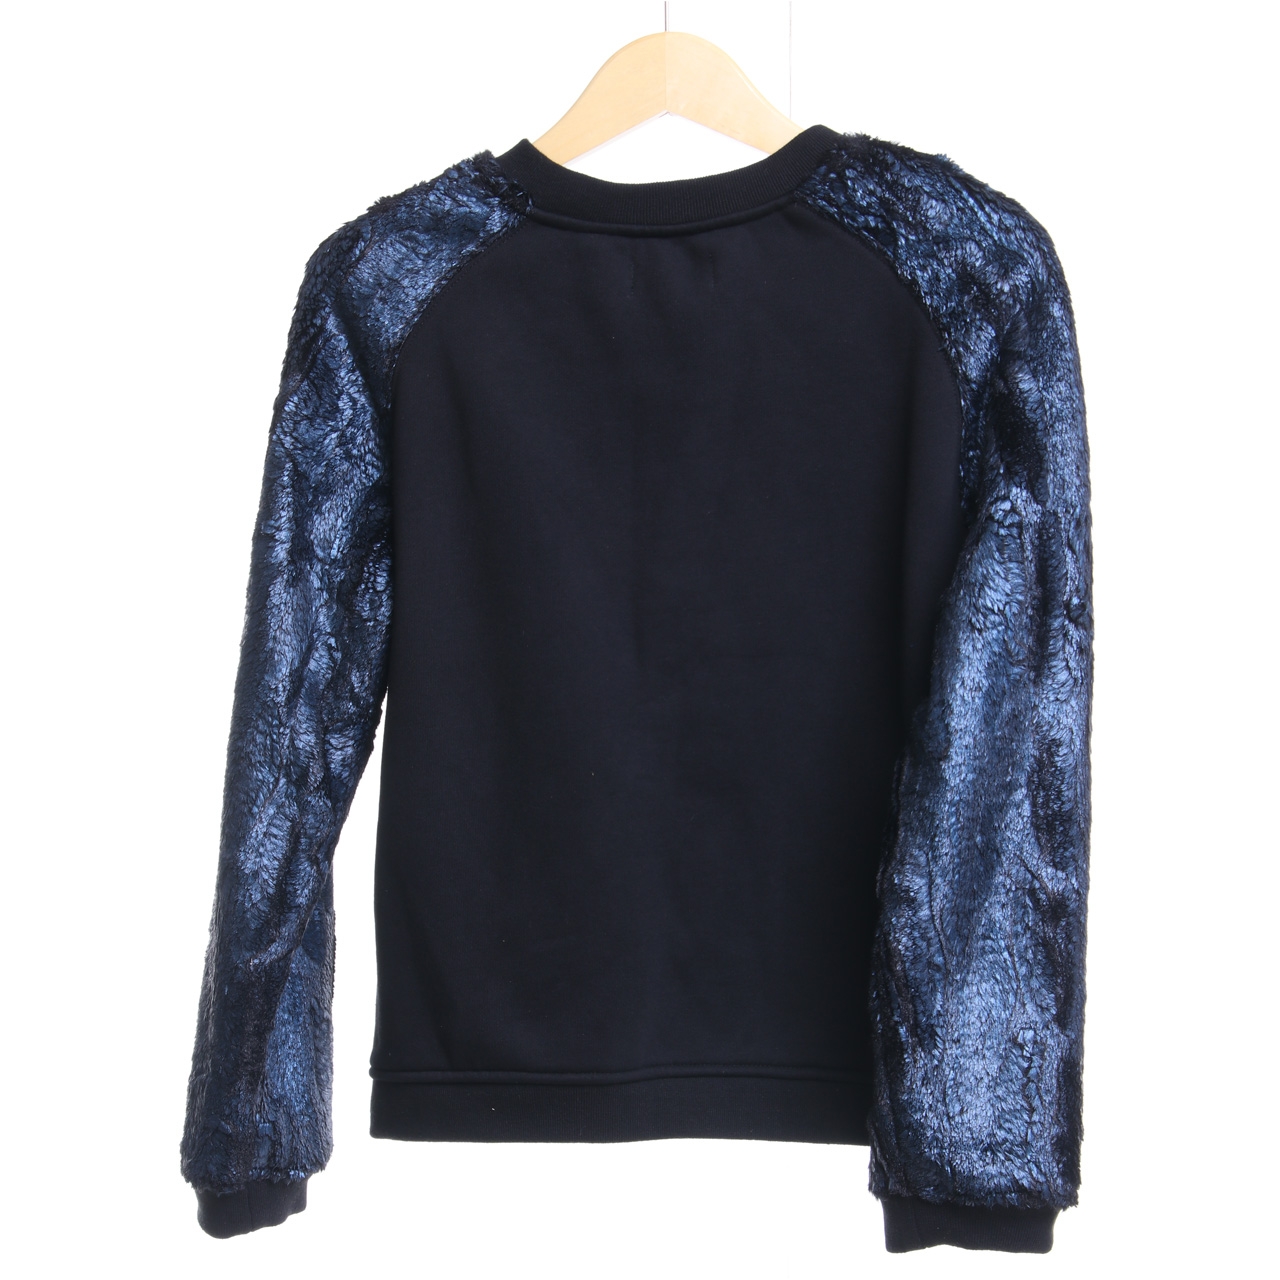 Eleven Paris Black And Dark Blue Sweater